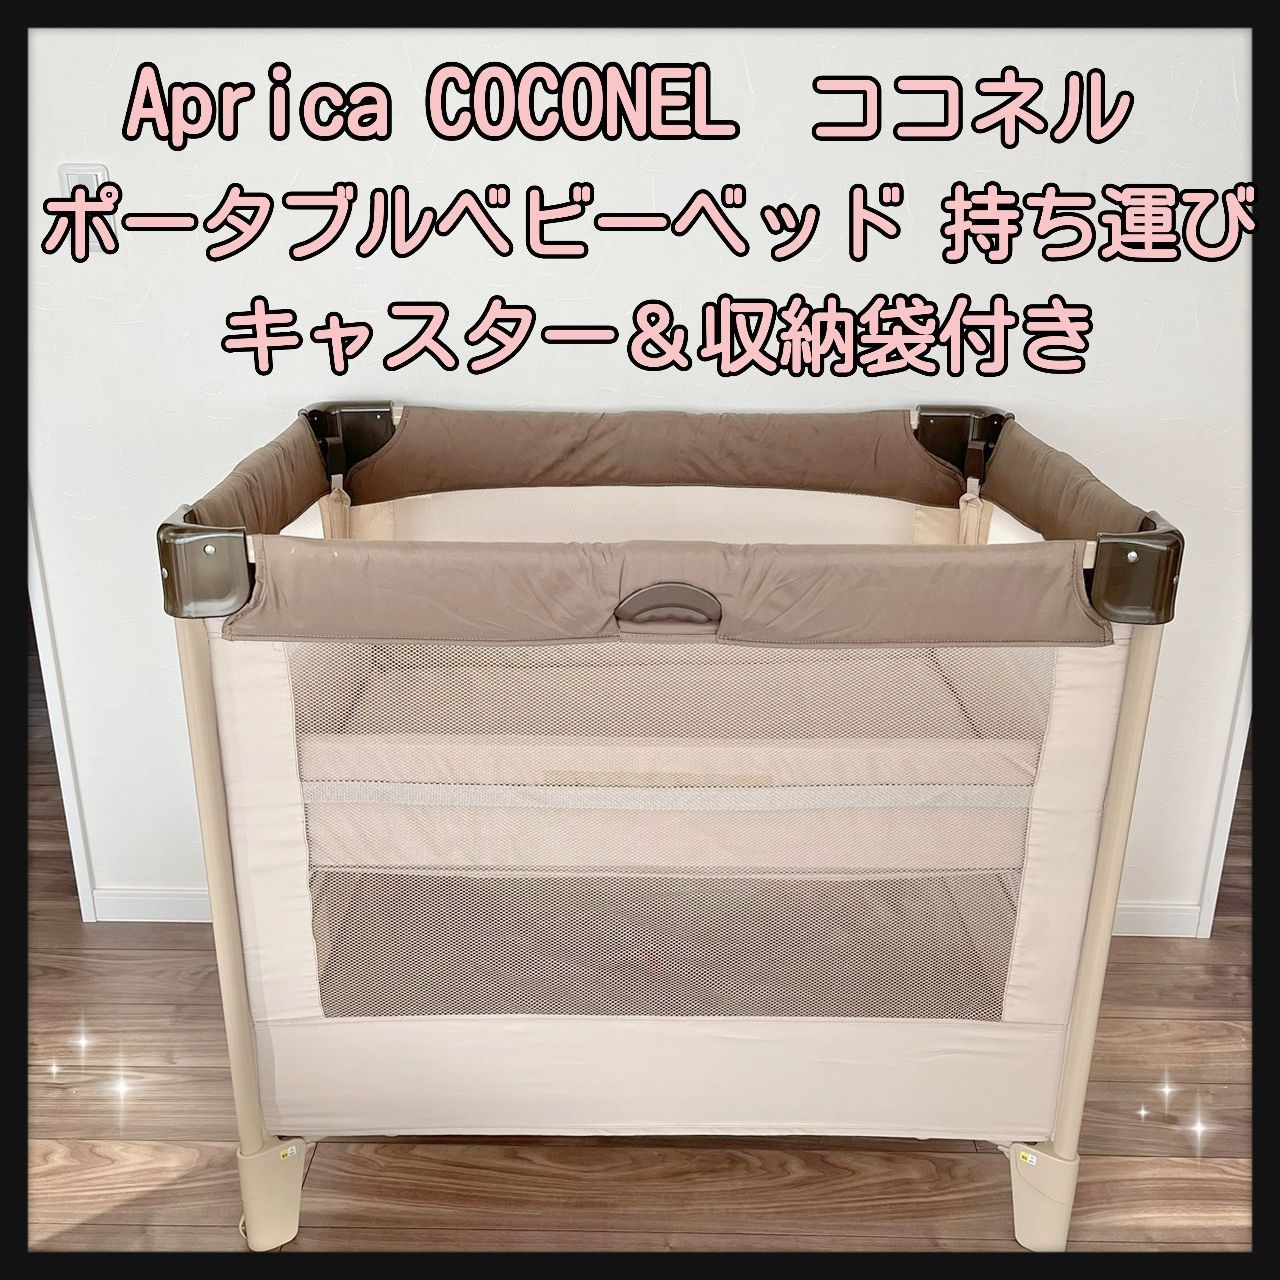 Aprica COCONEL アップリカ ココネル ポータブルベビーベッド 持ち運び キャスター＆収納袋付き